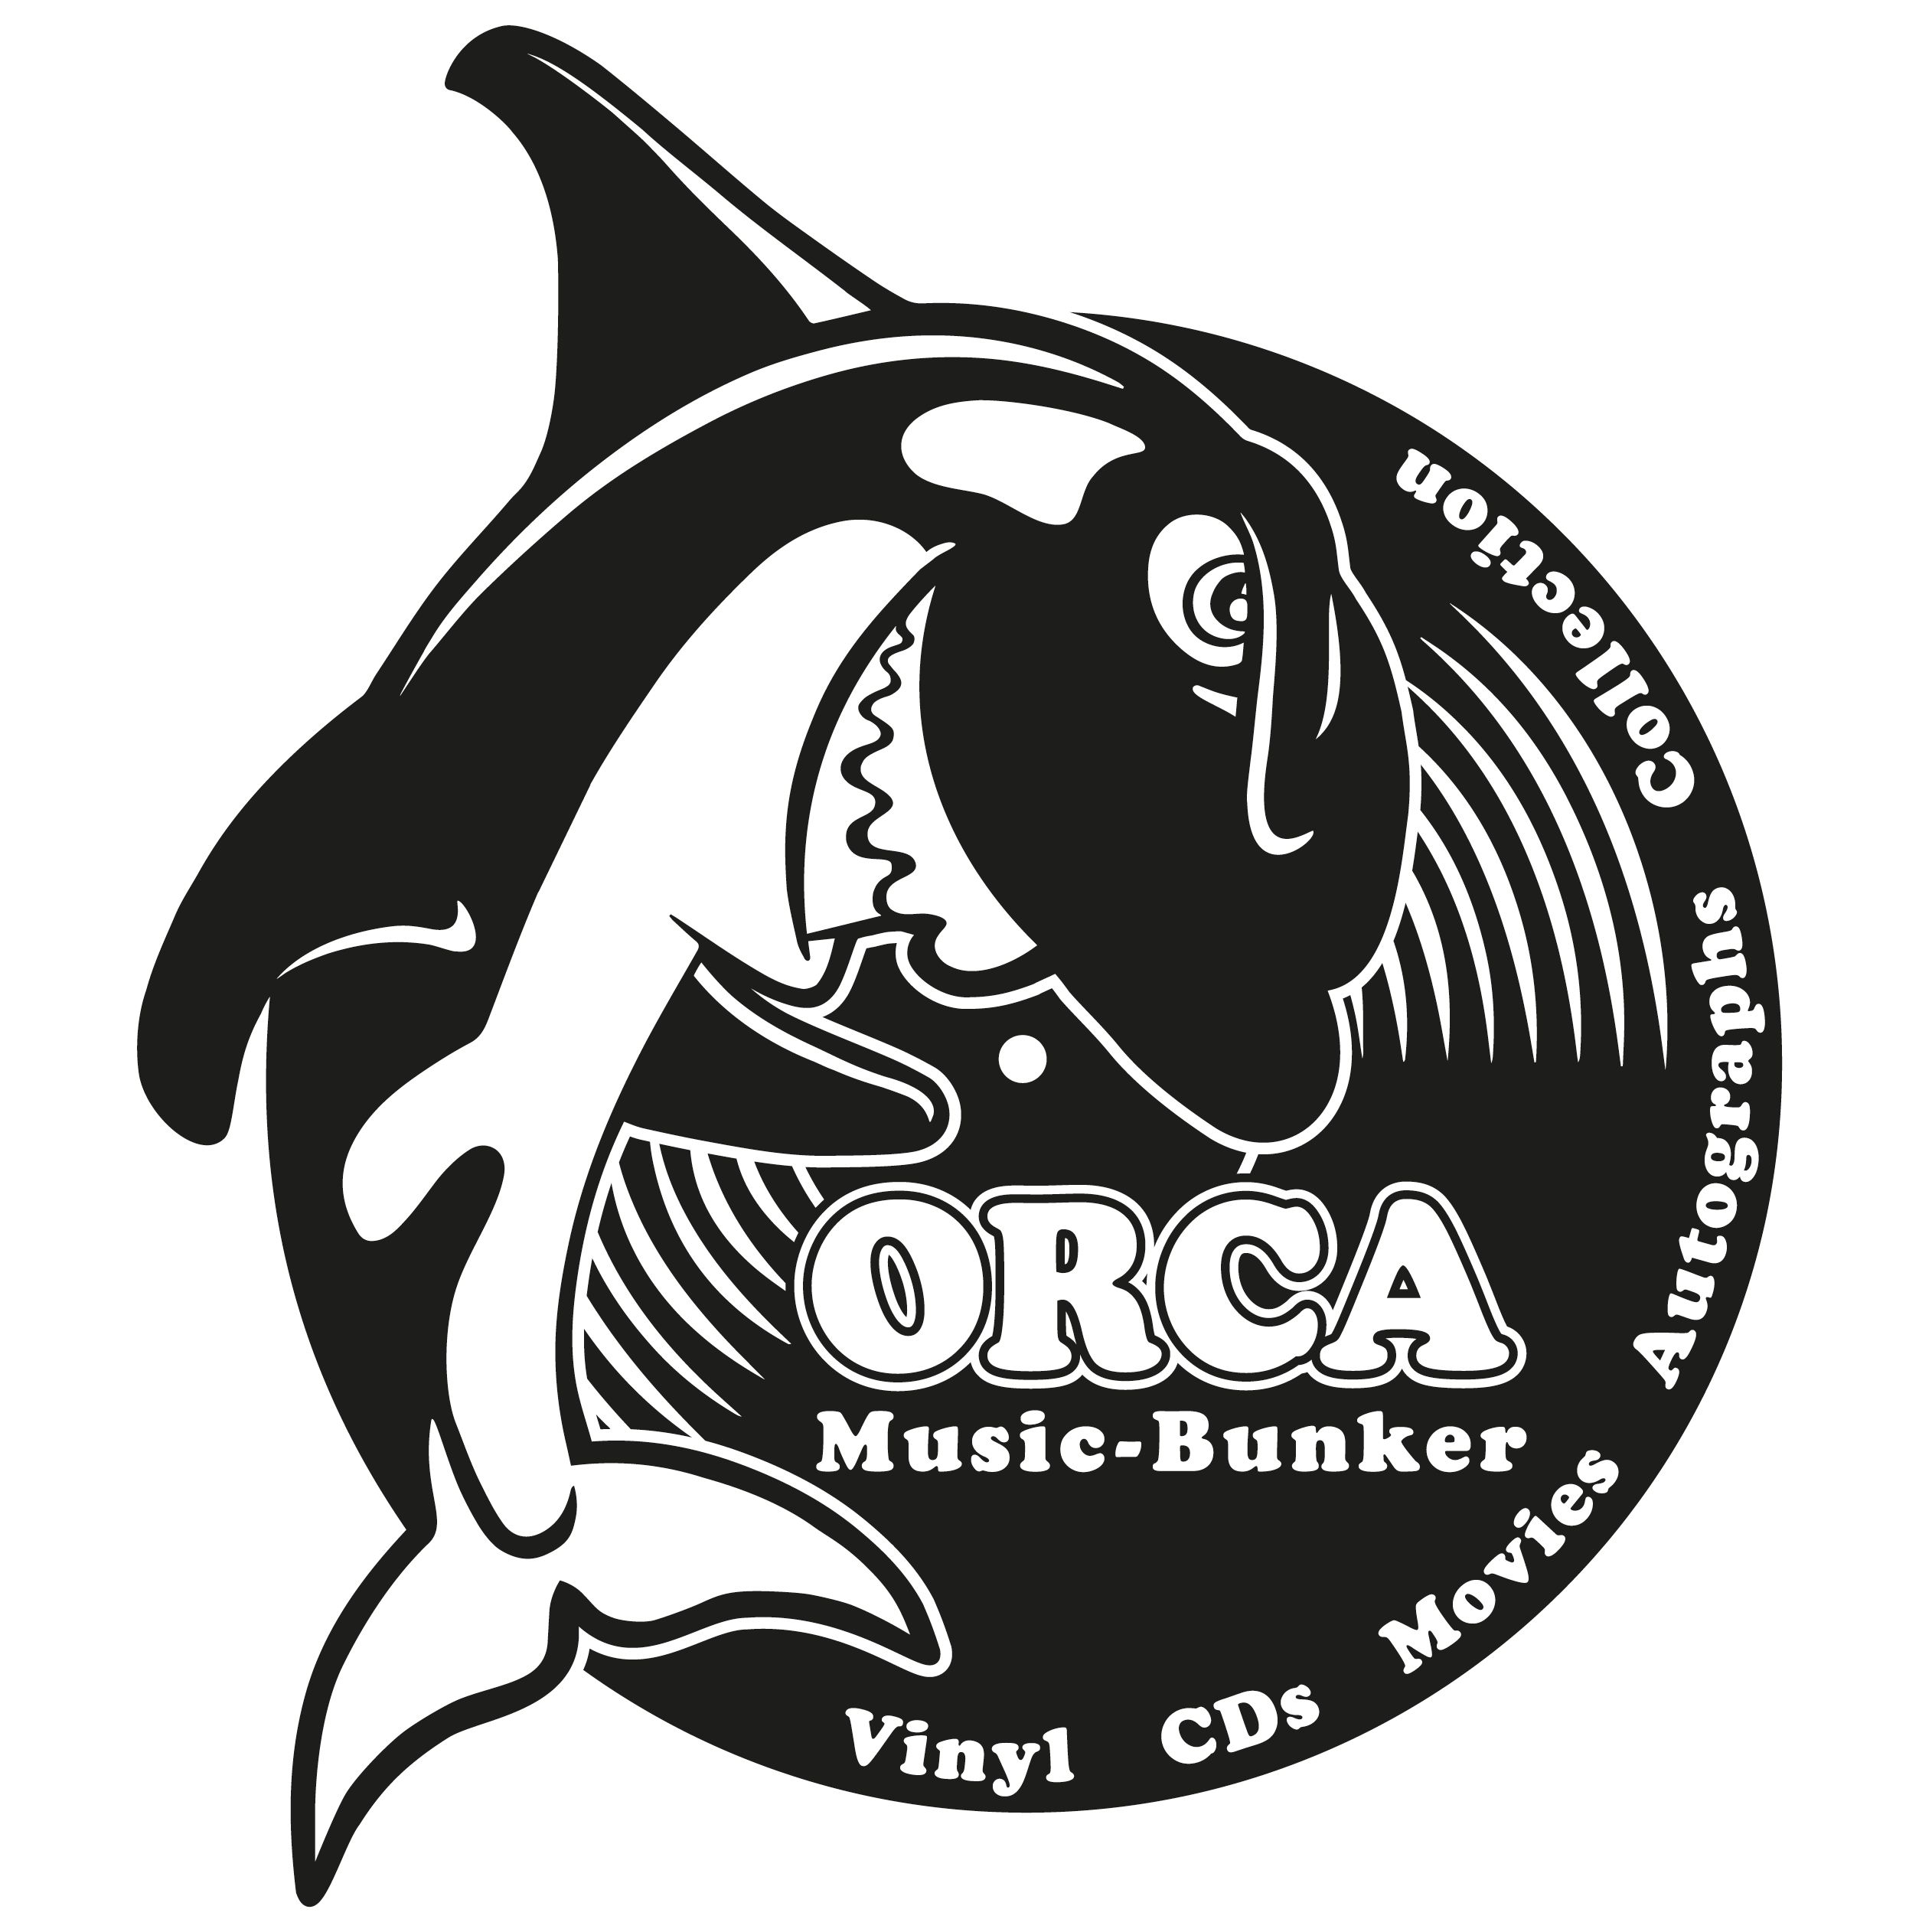 ORCA Music-Bunker